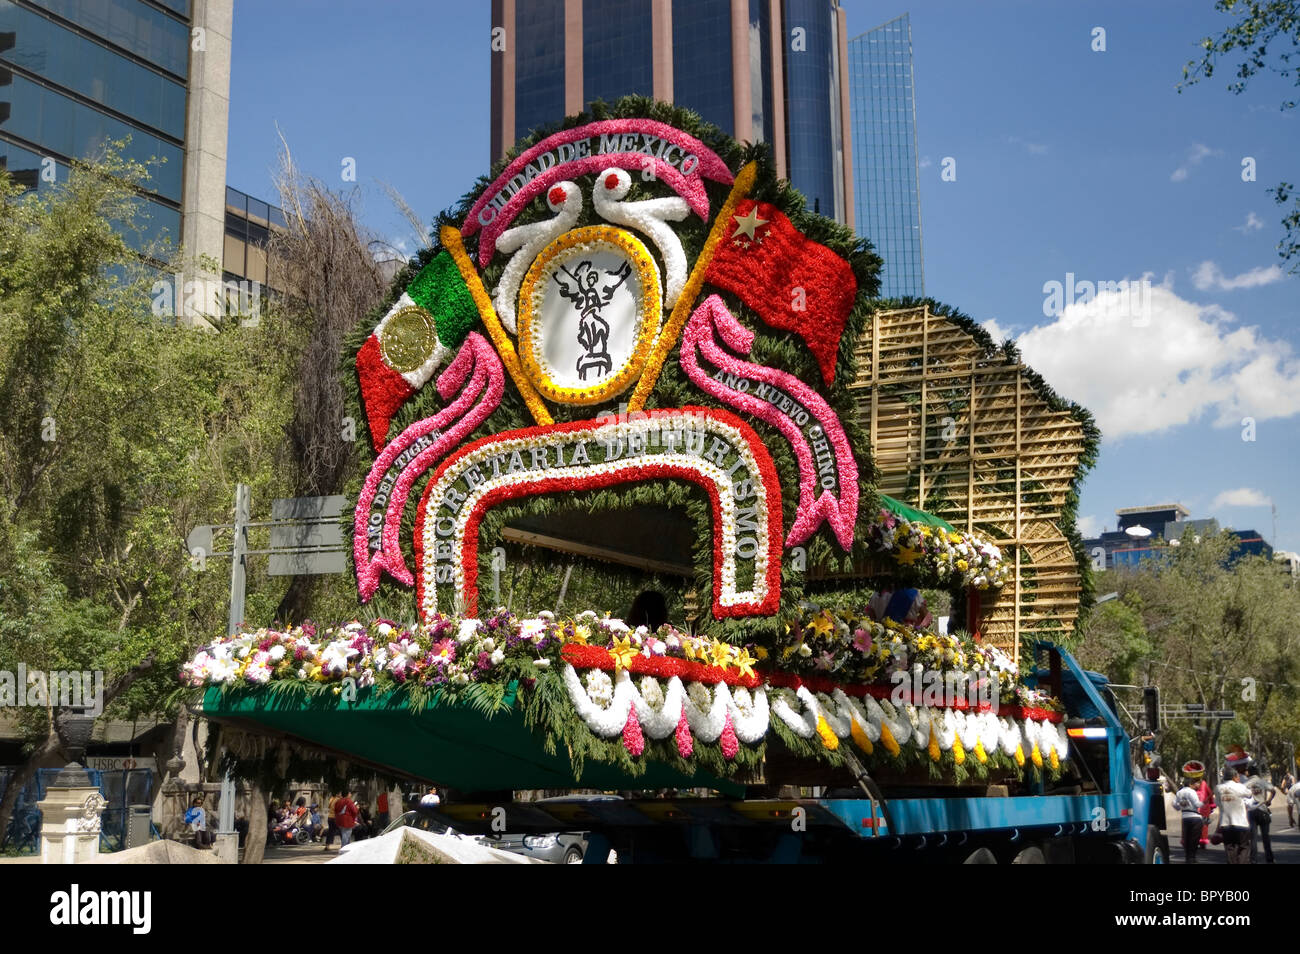 Mexican trajinera in a parade in Mexico city Stock Photo